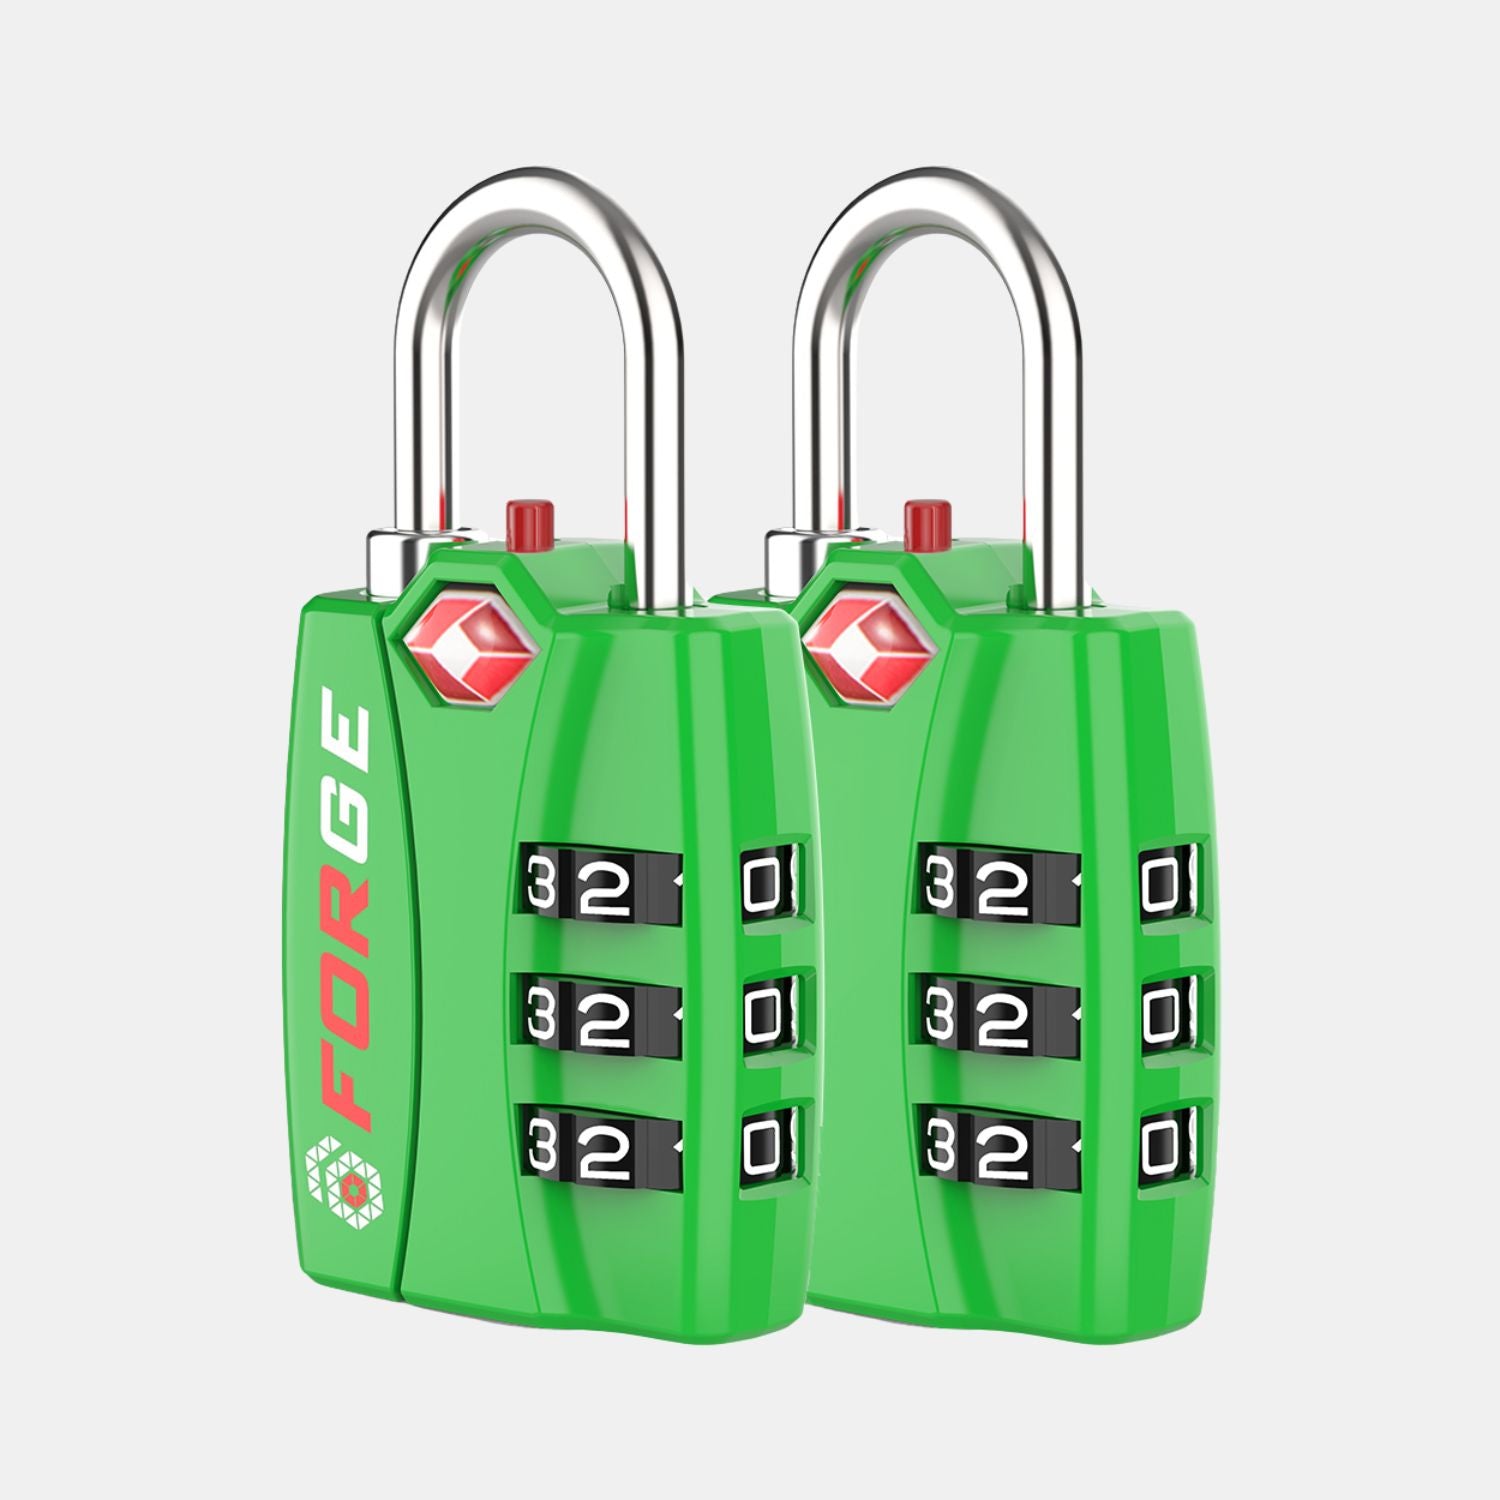 TSA-Approved Luggage Locks: 3-Digit Combination, Open Alert Indicator, Green 2 Locks